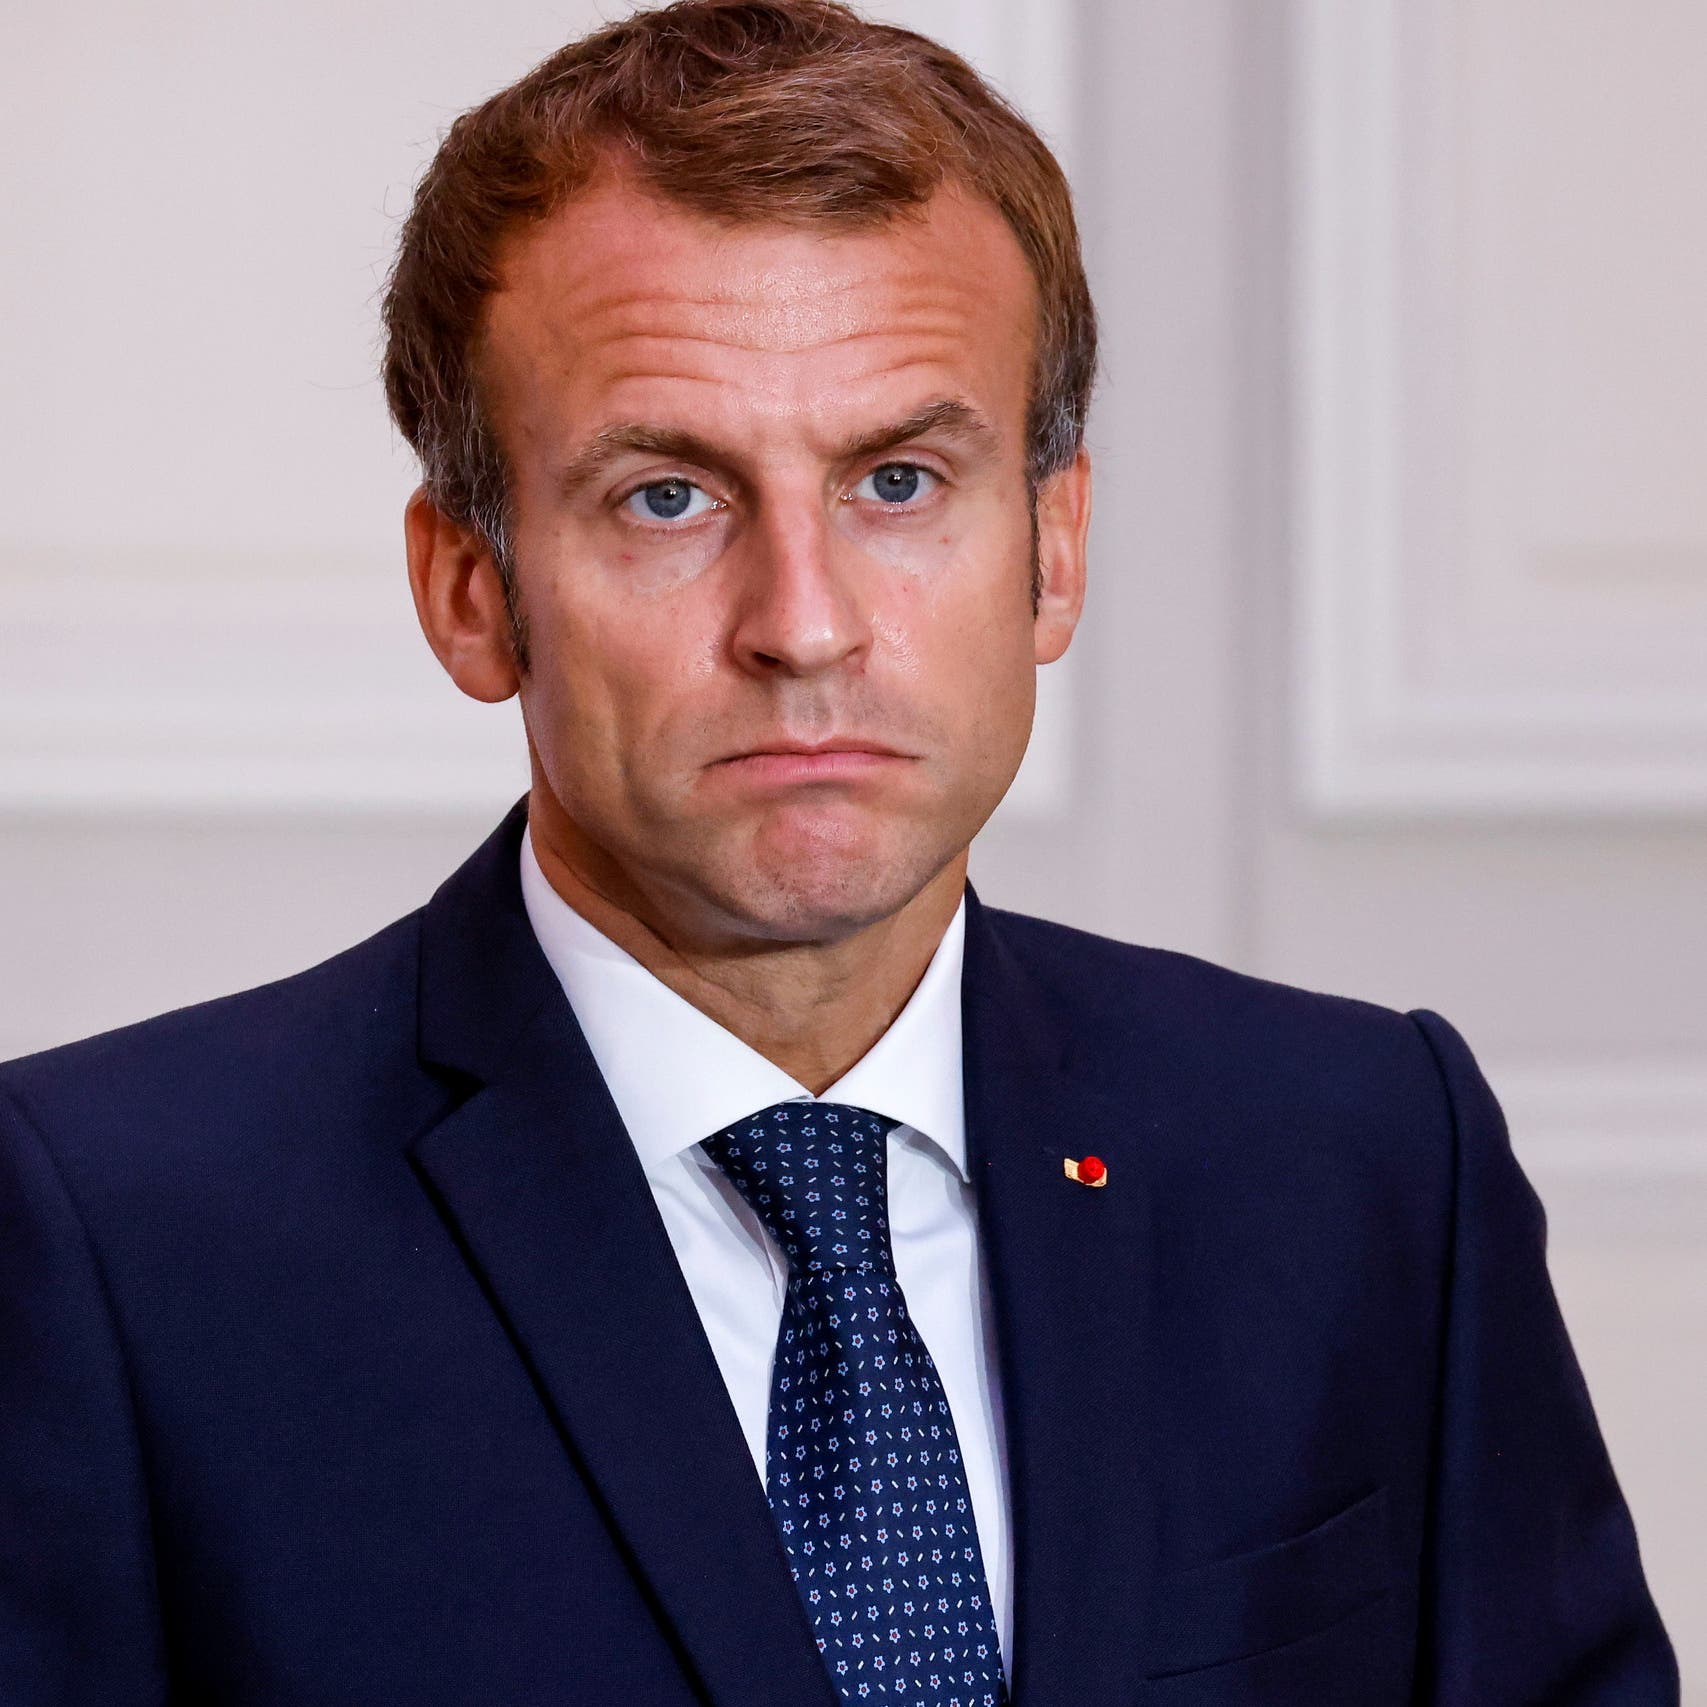 President Macron regrets ‘misunderstandings’ over Algeria comments: Official